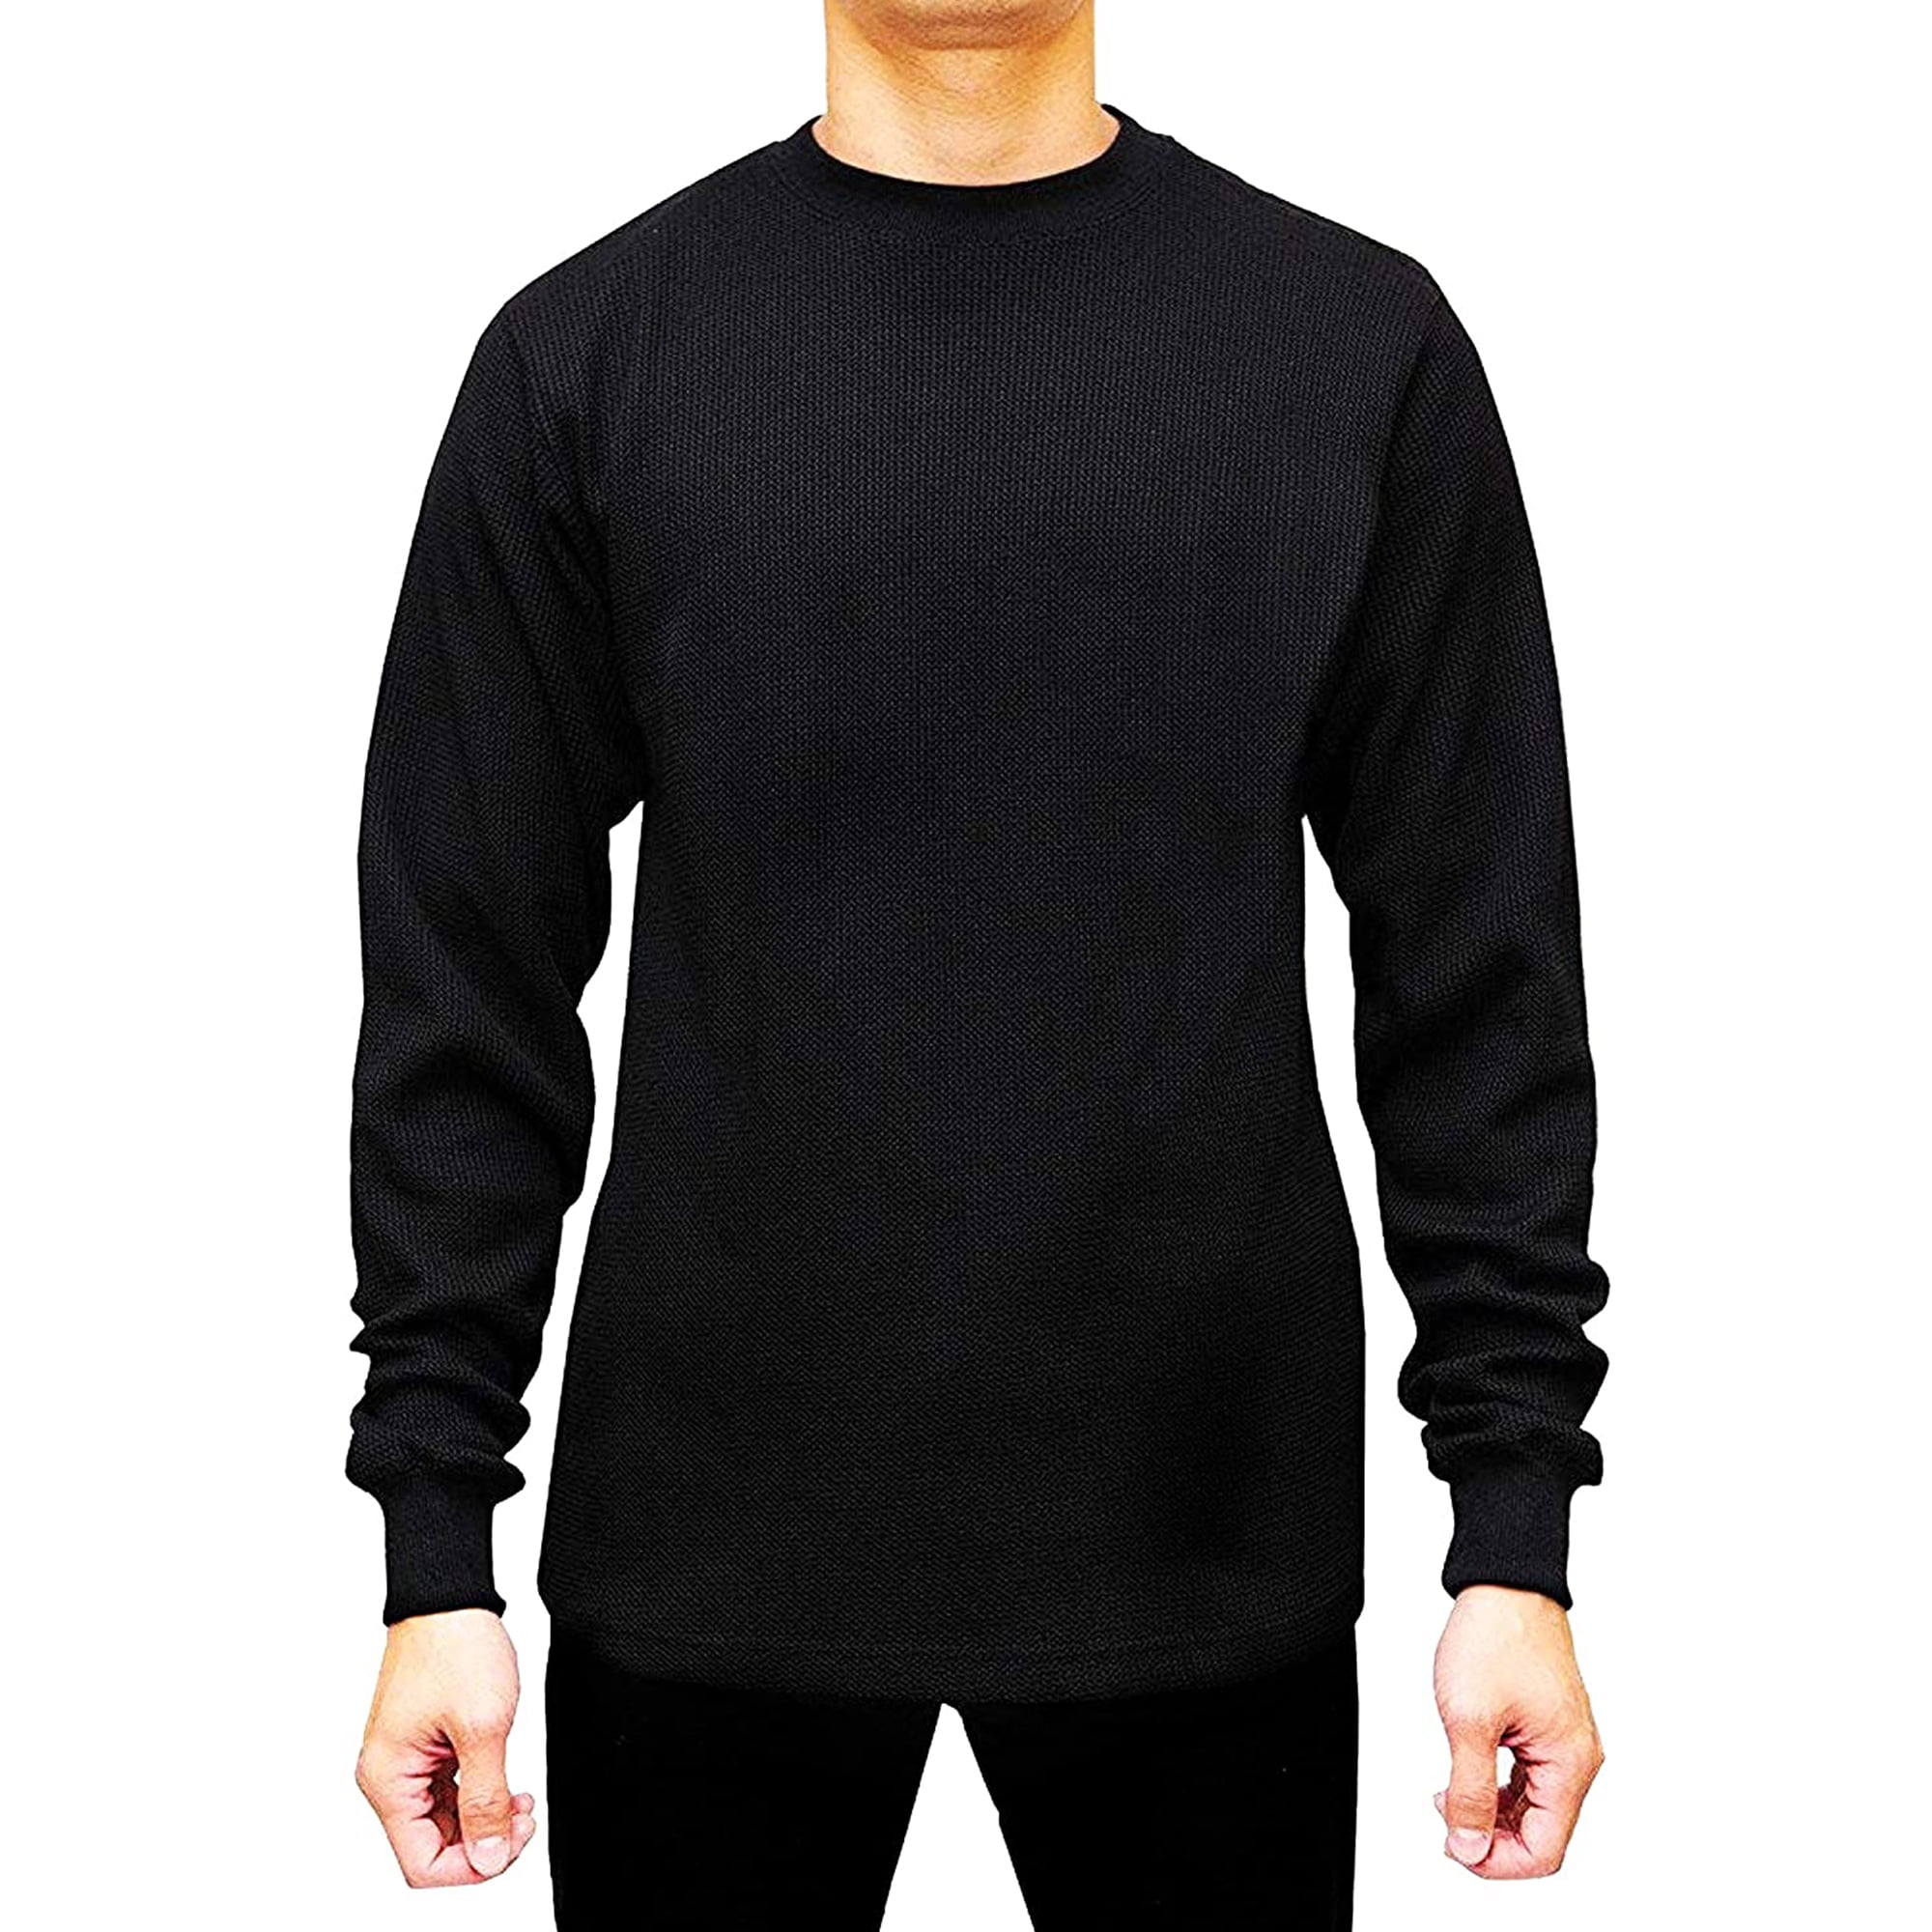 JMR USA INC Long Sleeve Crew Neck Waffle Knit Thermal Shirt for Men ...